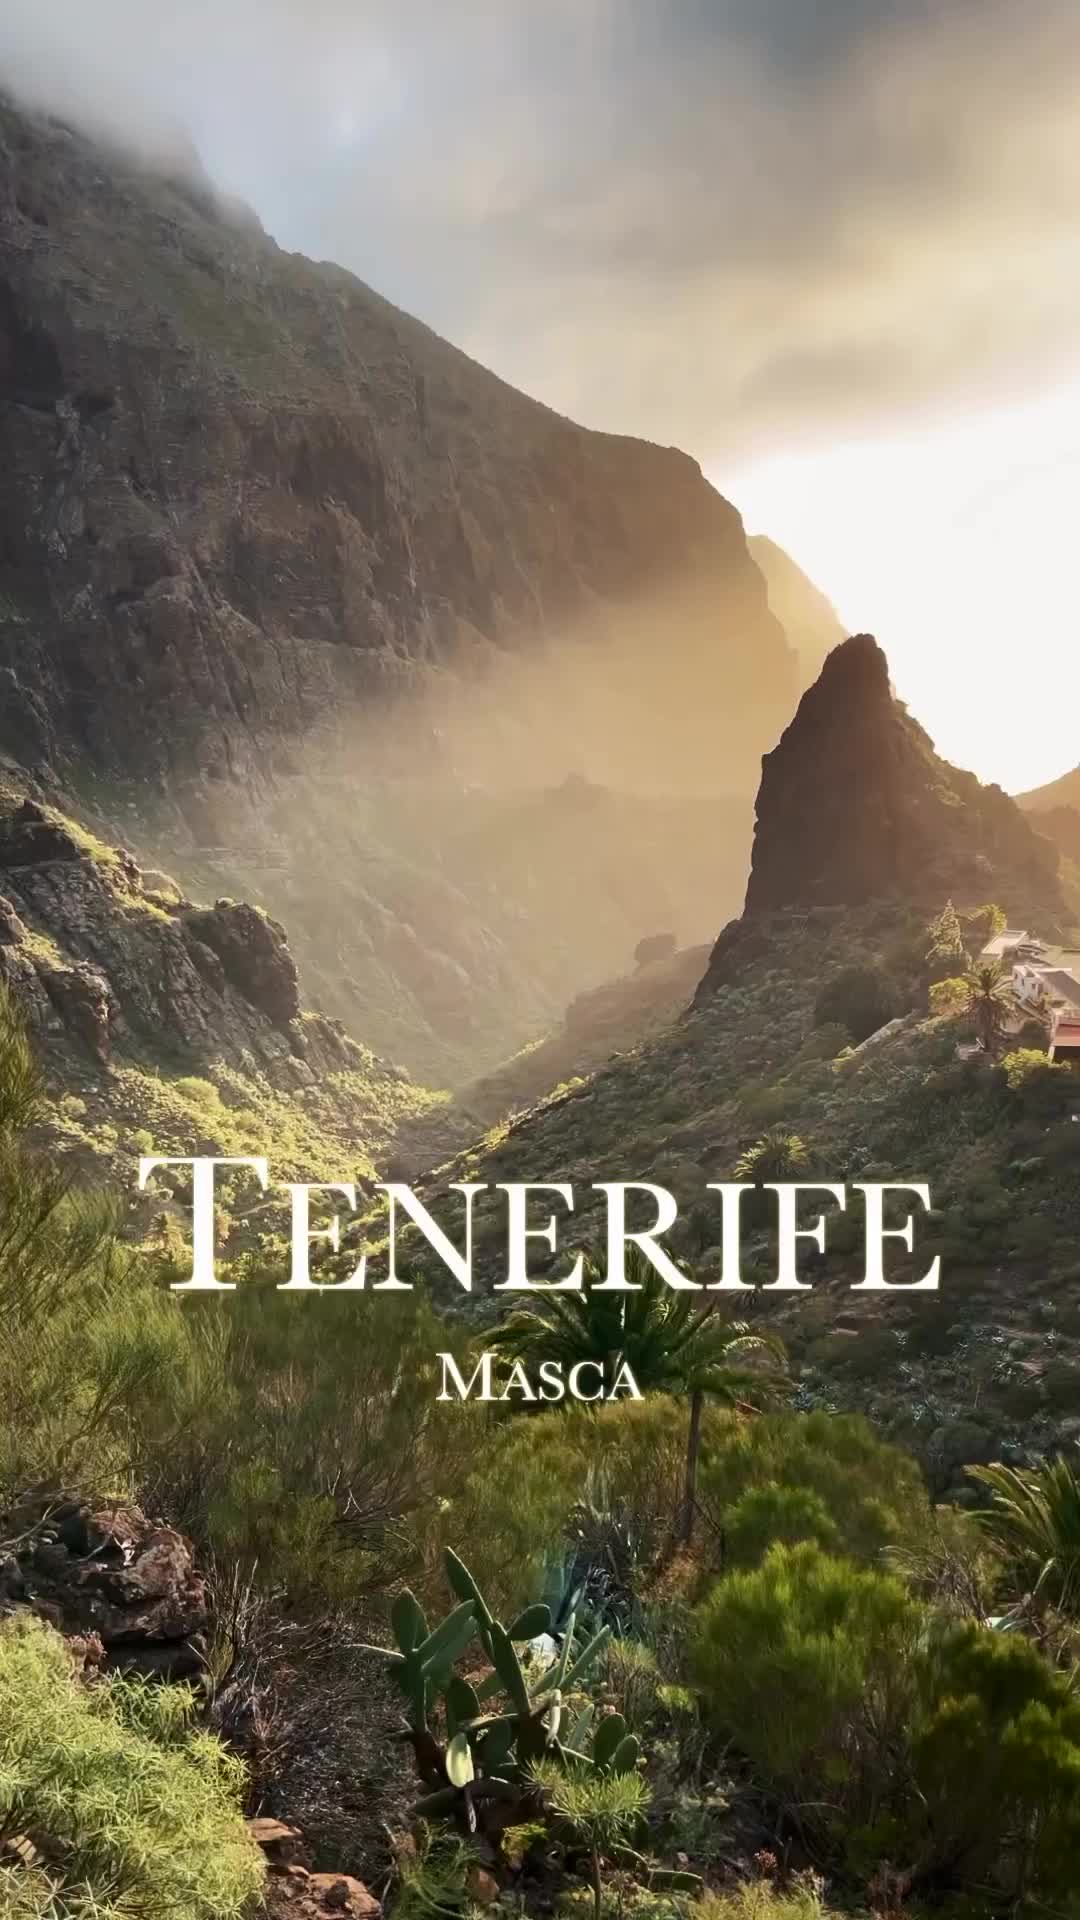 Magical Valle de Masca in Tenerife, Spain